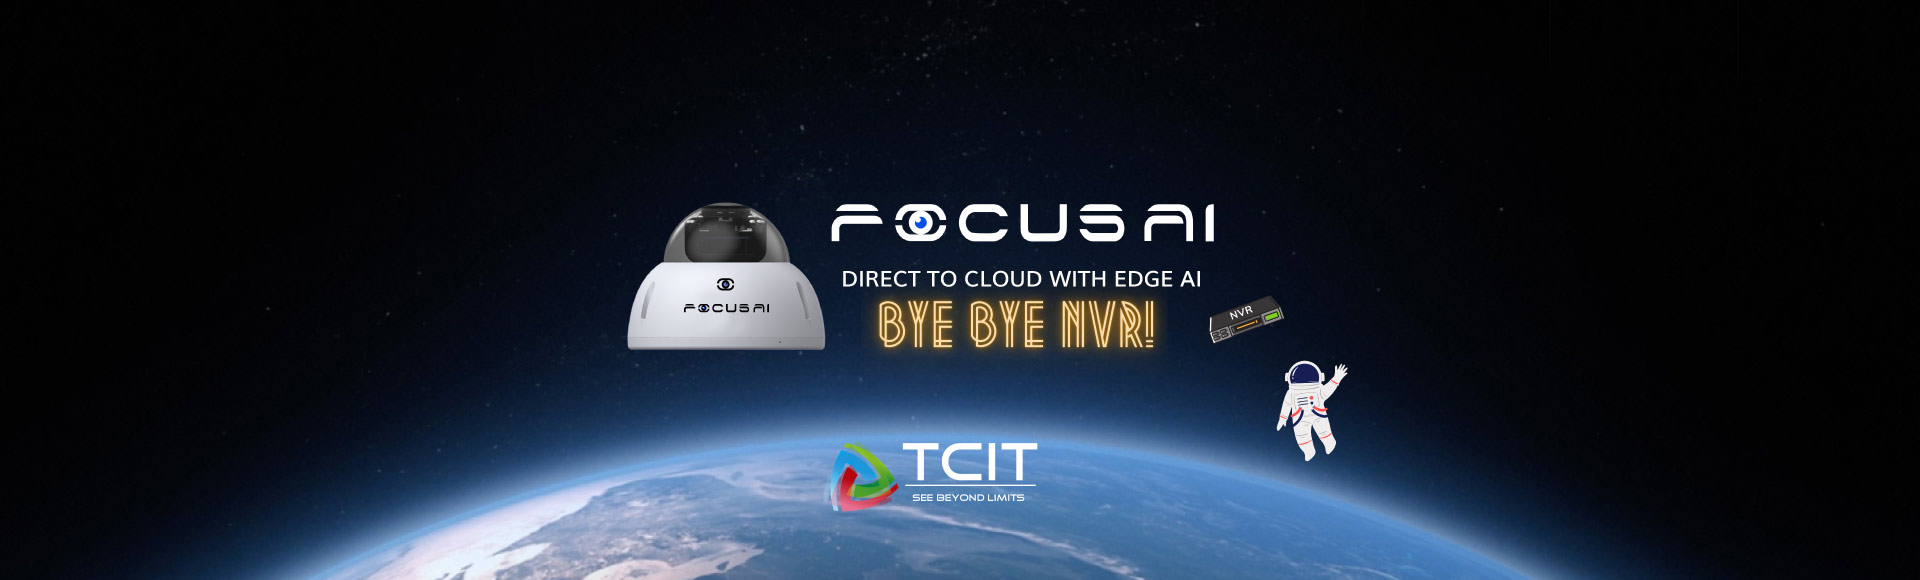 TCIT-FocusAI AI camera